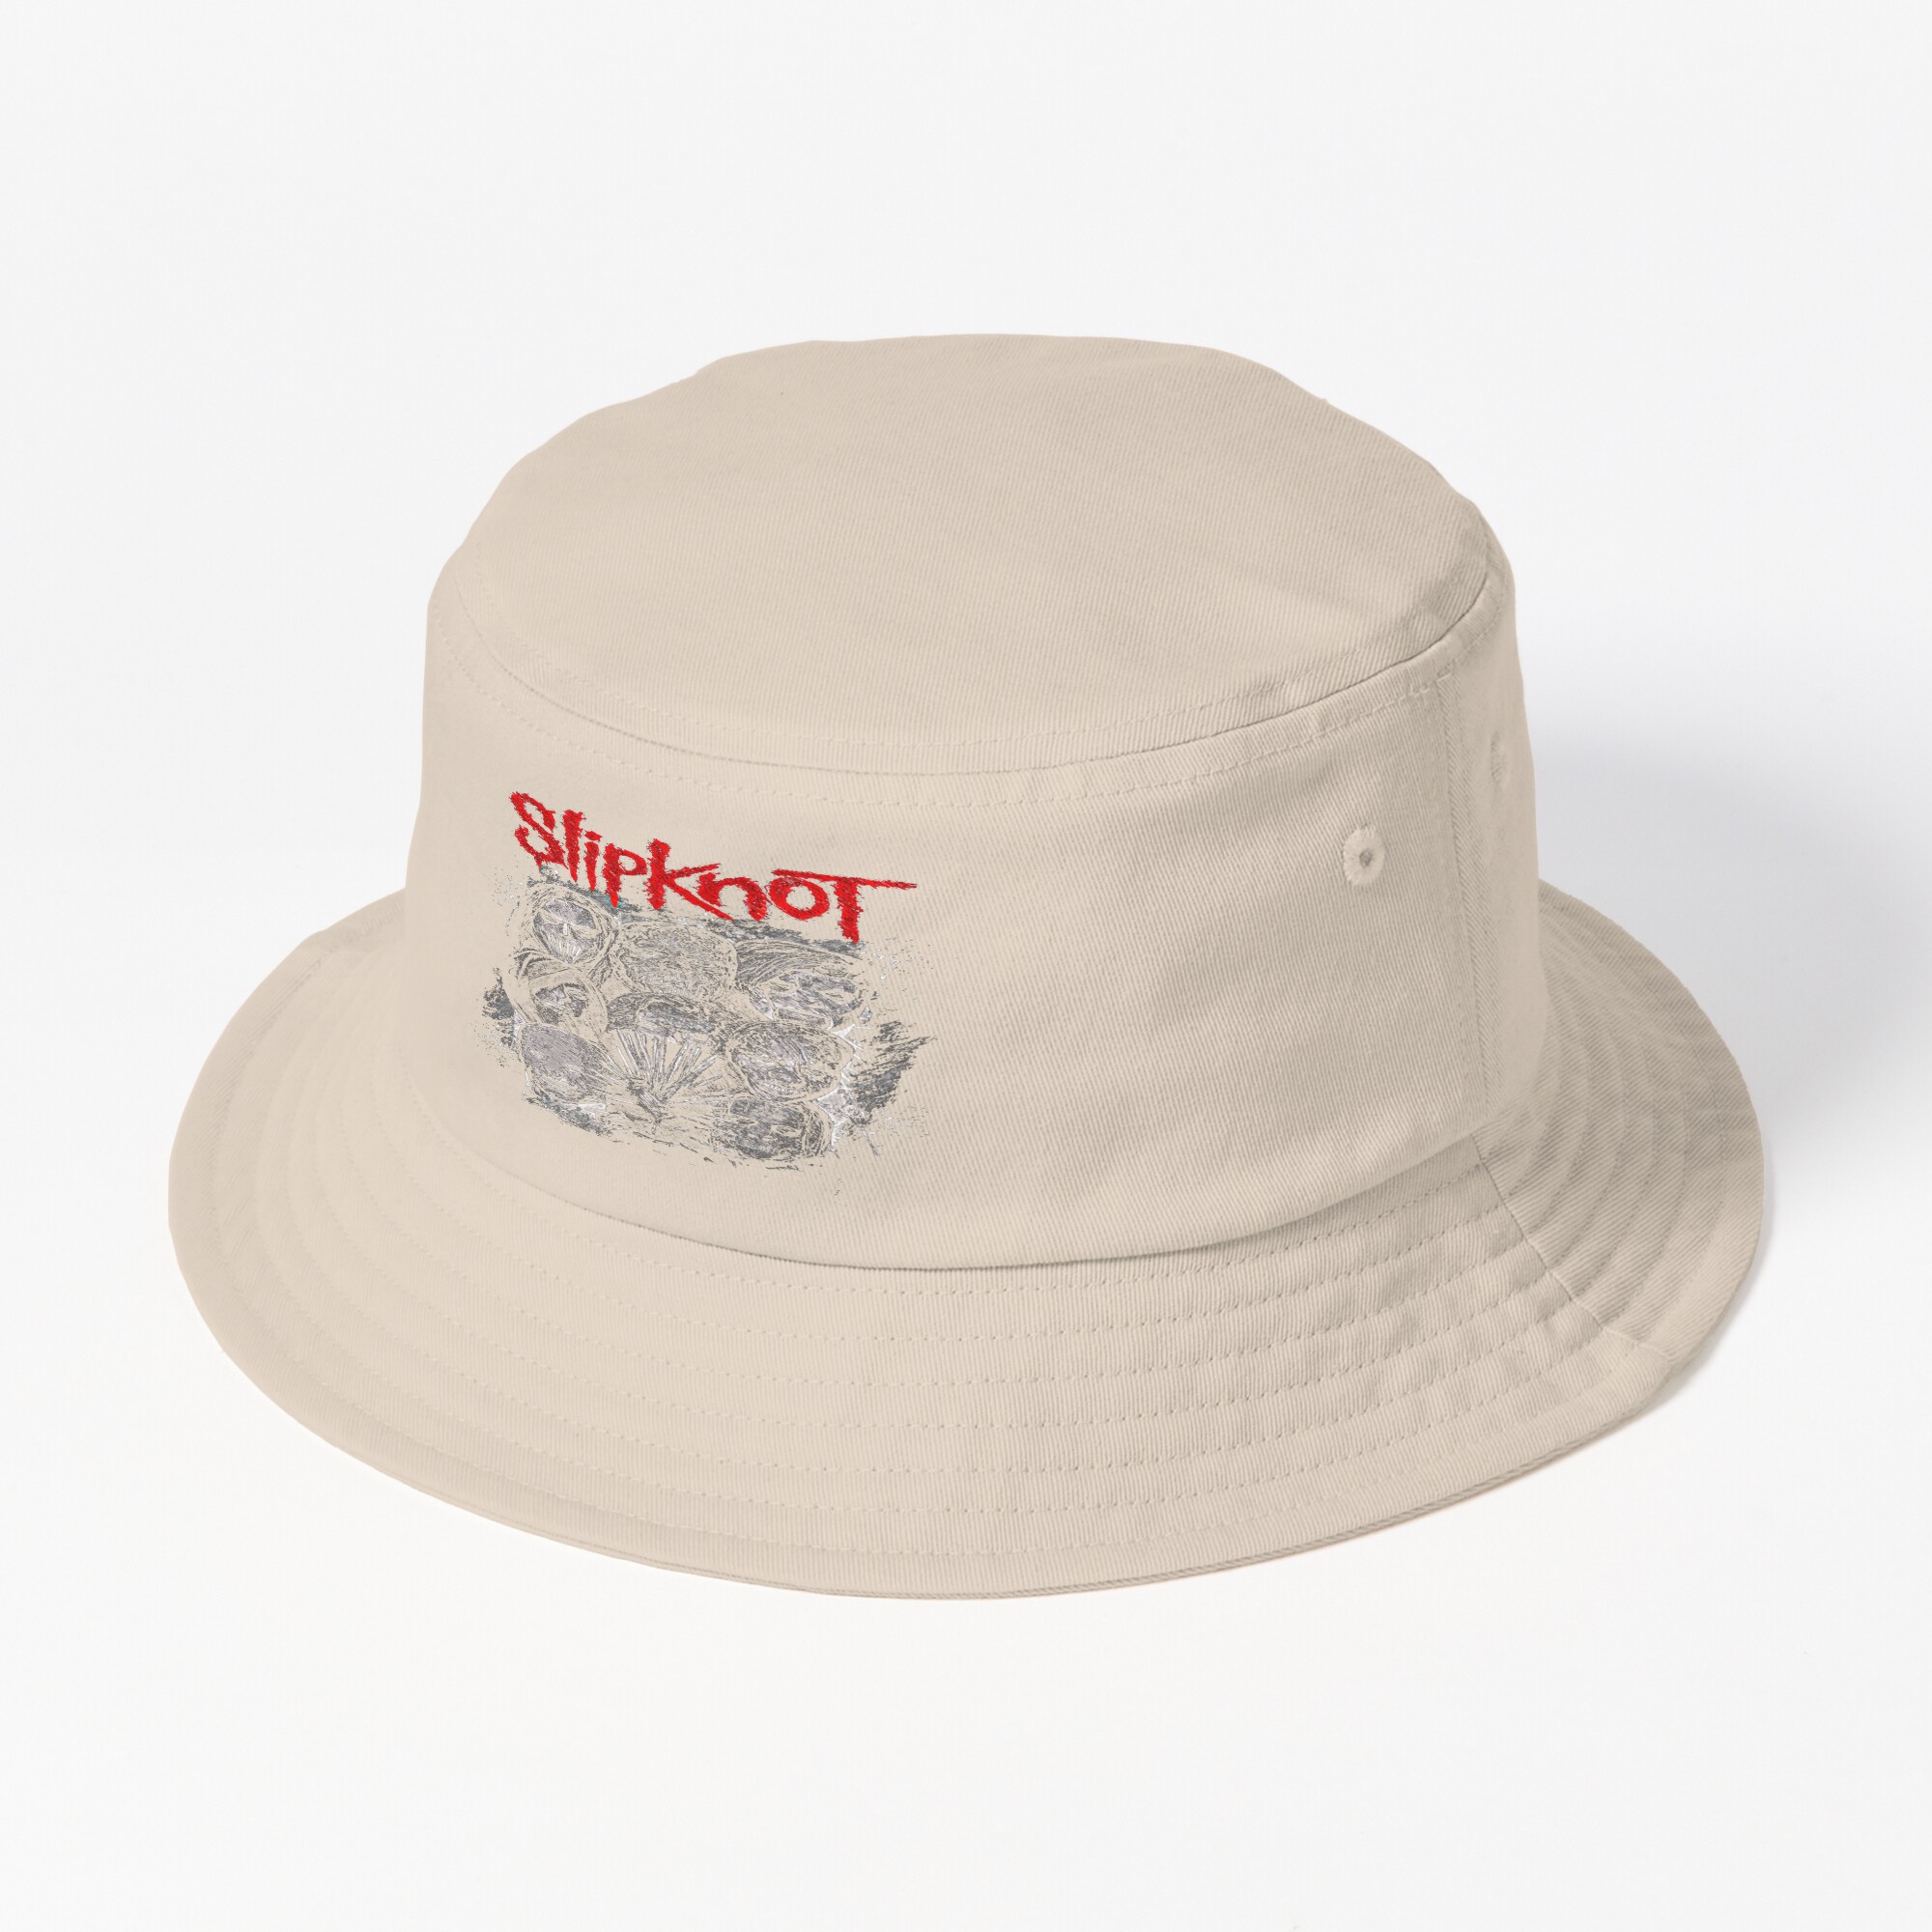 ssrcobucket hatproducte5d6c5f62bbf65eeprimarysquare2000x2000 bgf8f8f8 6 - Slipknot Shop